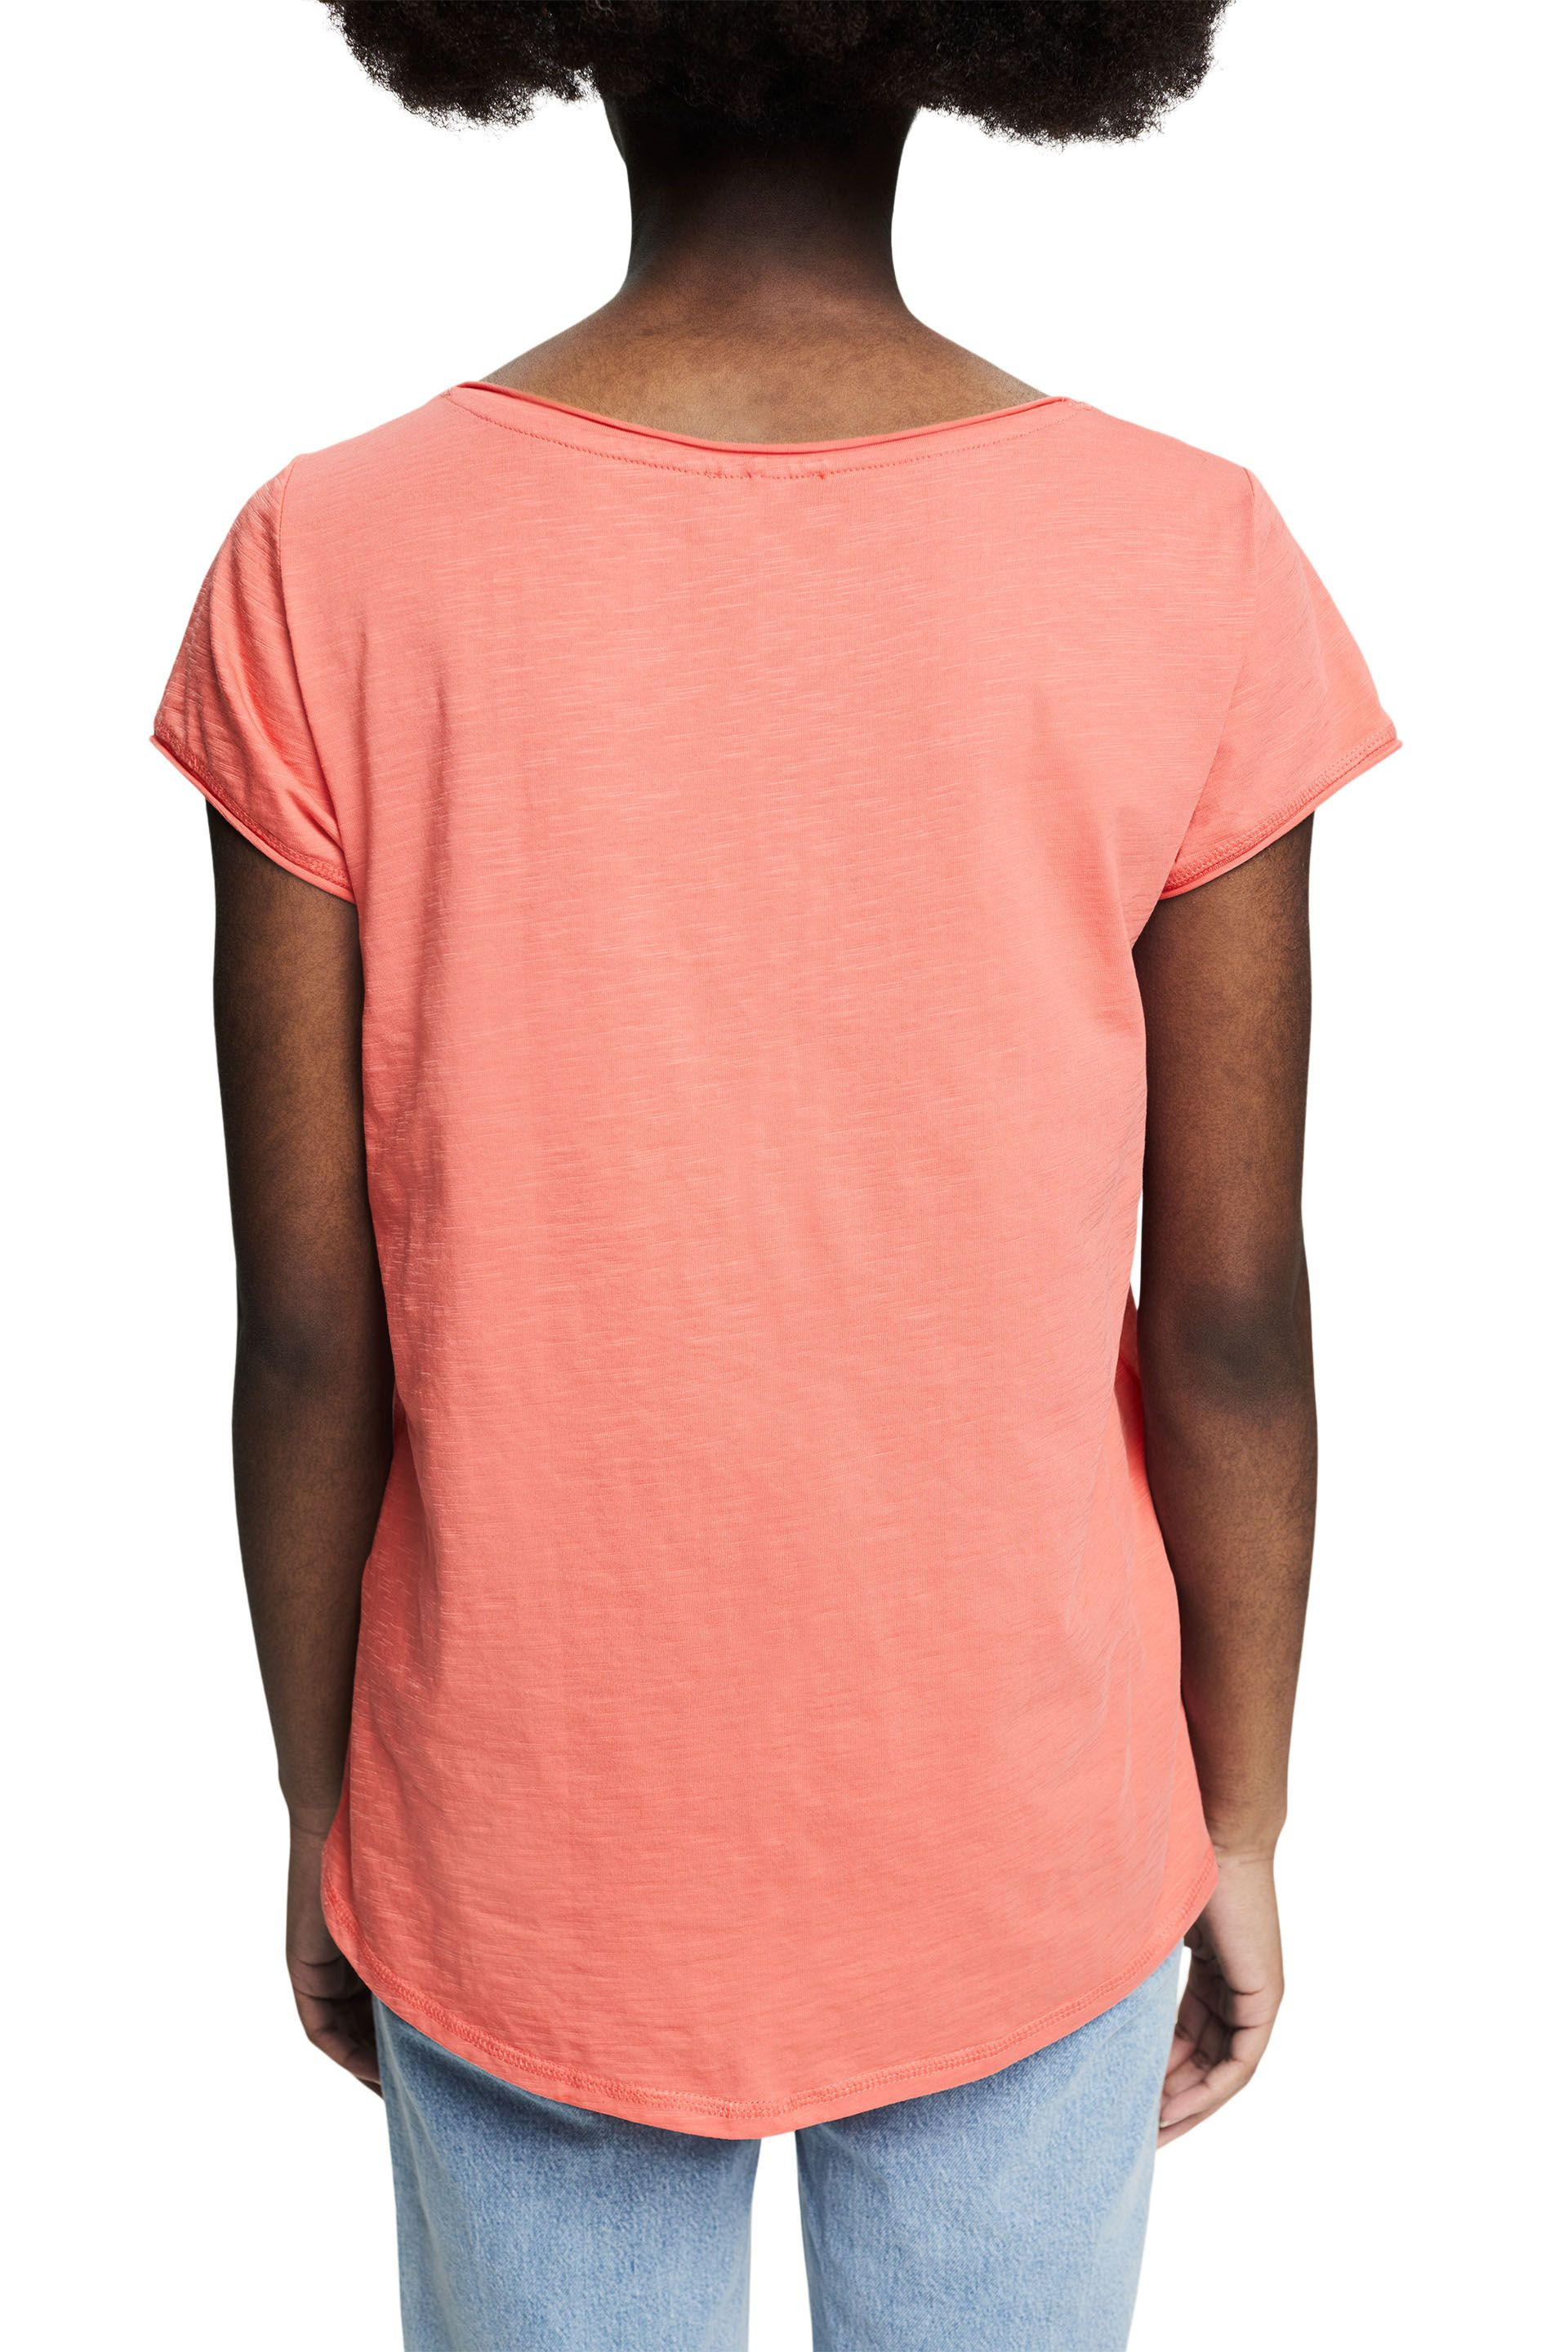 T-shirt a tinta unita, Arancione, large image number 2